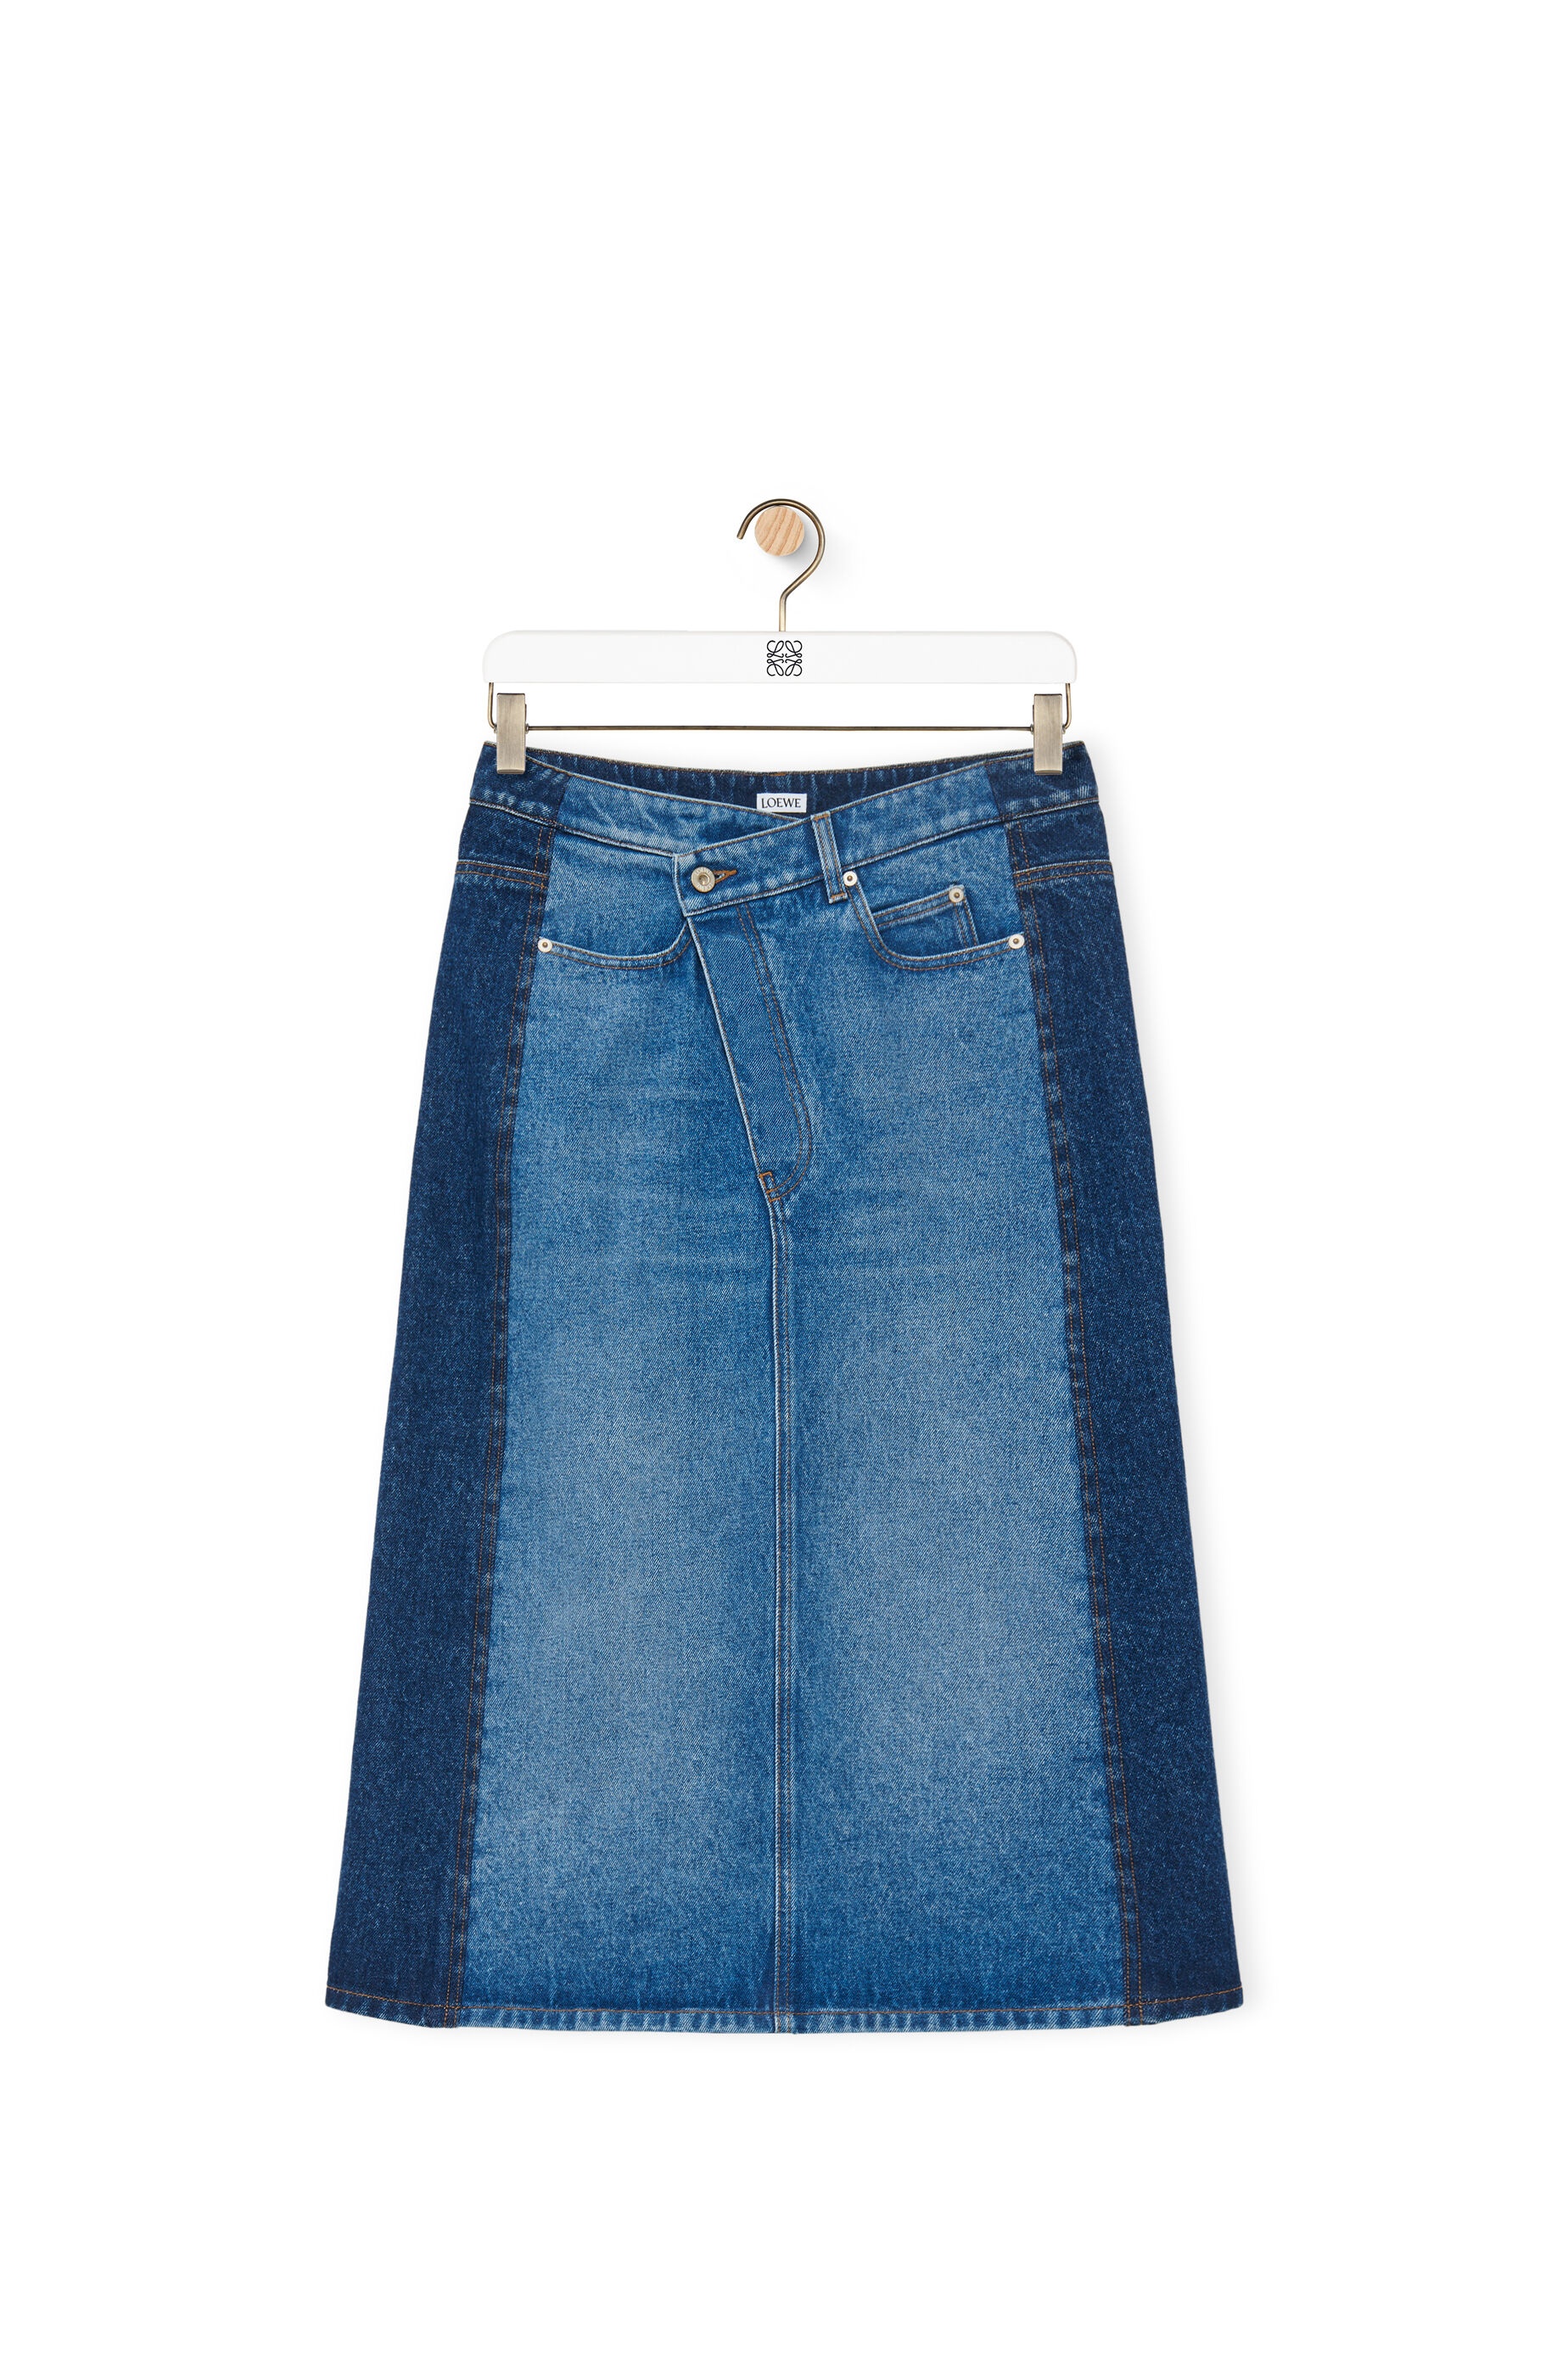 Deconstructed skirt in denim - 1